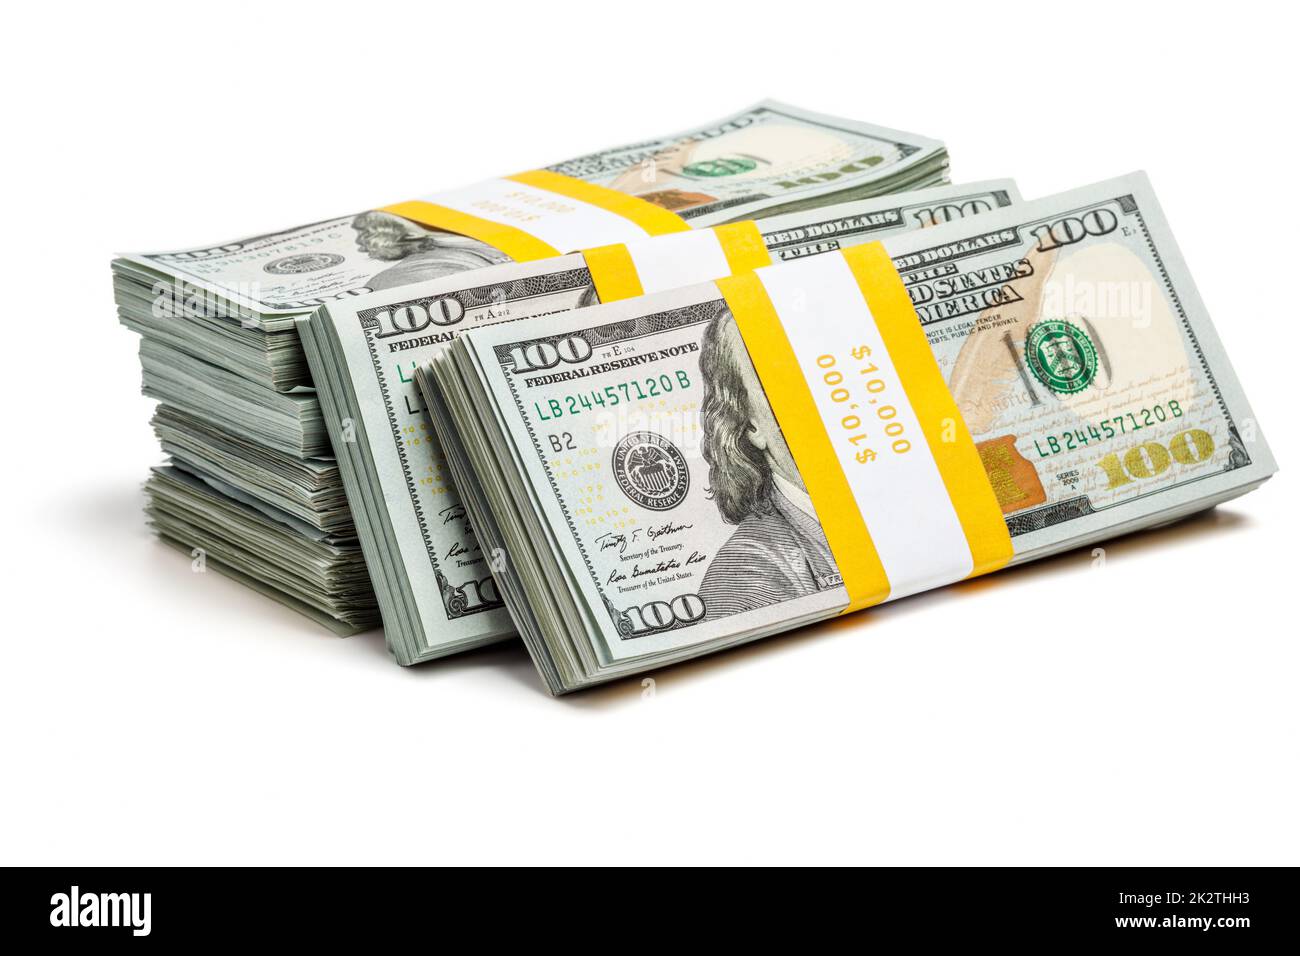 Bundles of 100 US dollars 2013 edition bills Stock Photo